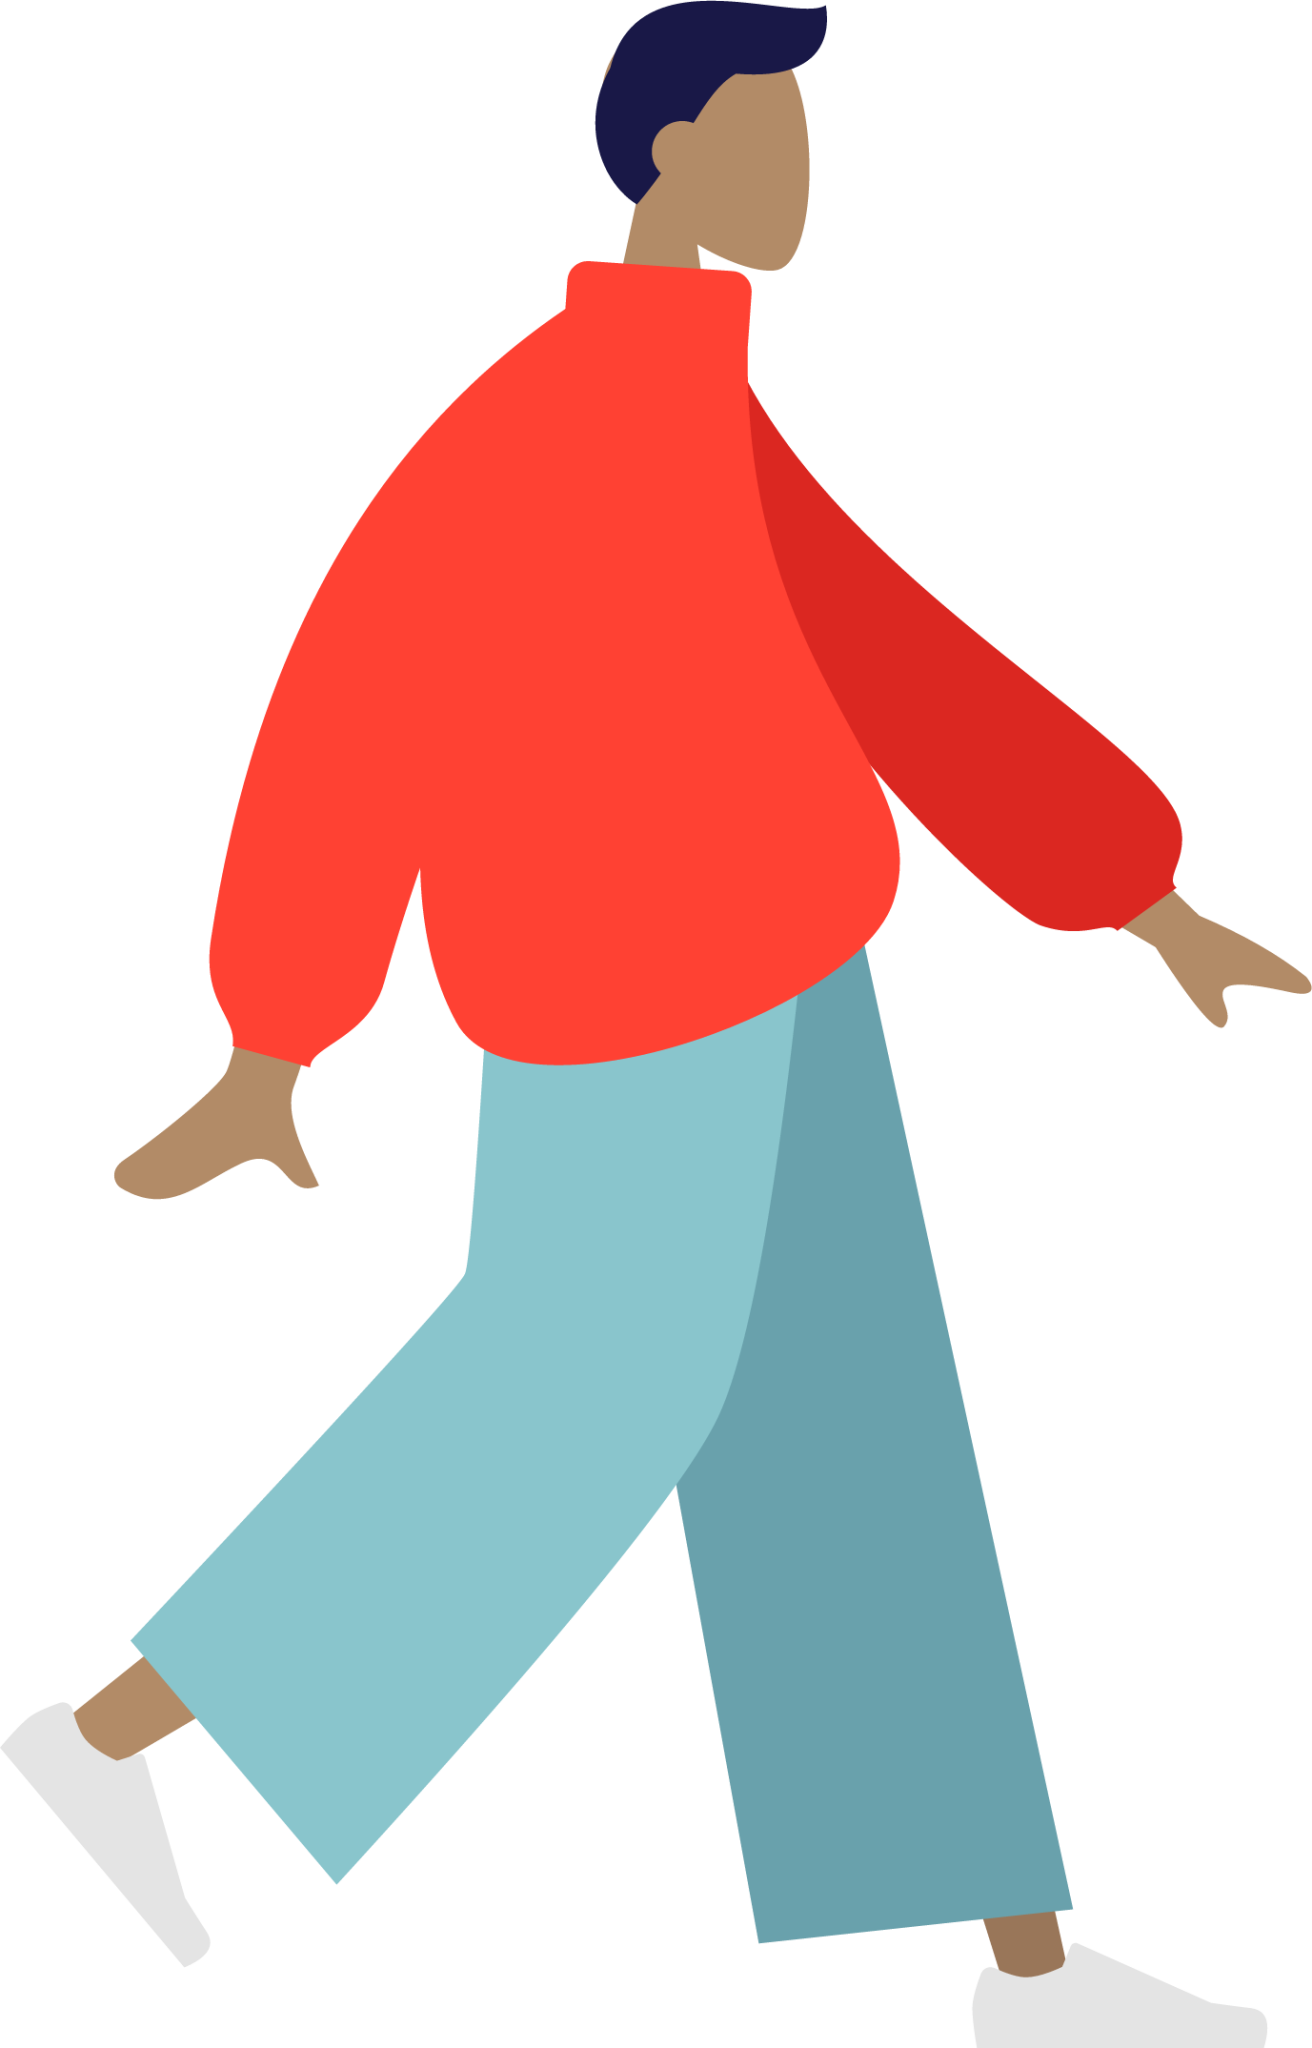 red jacket walking illustration